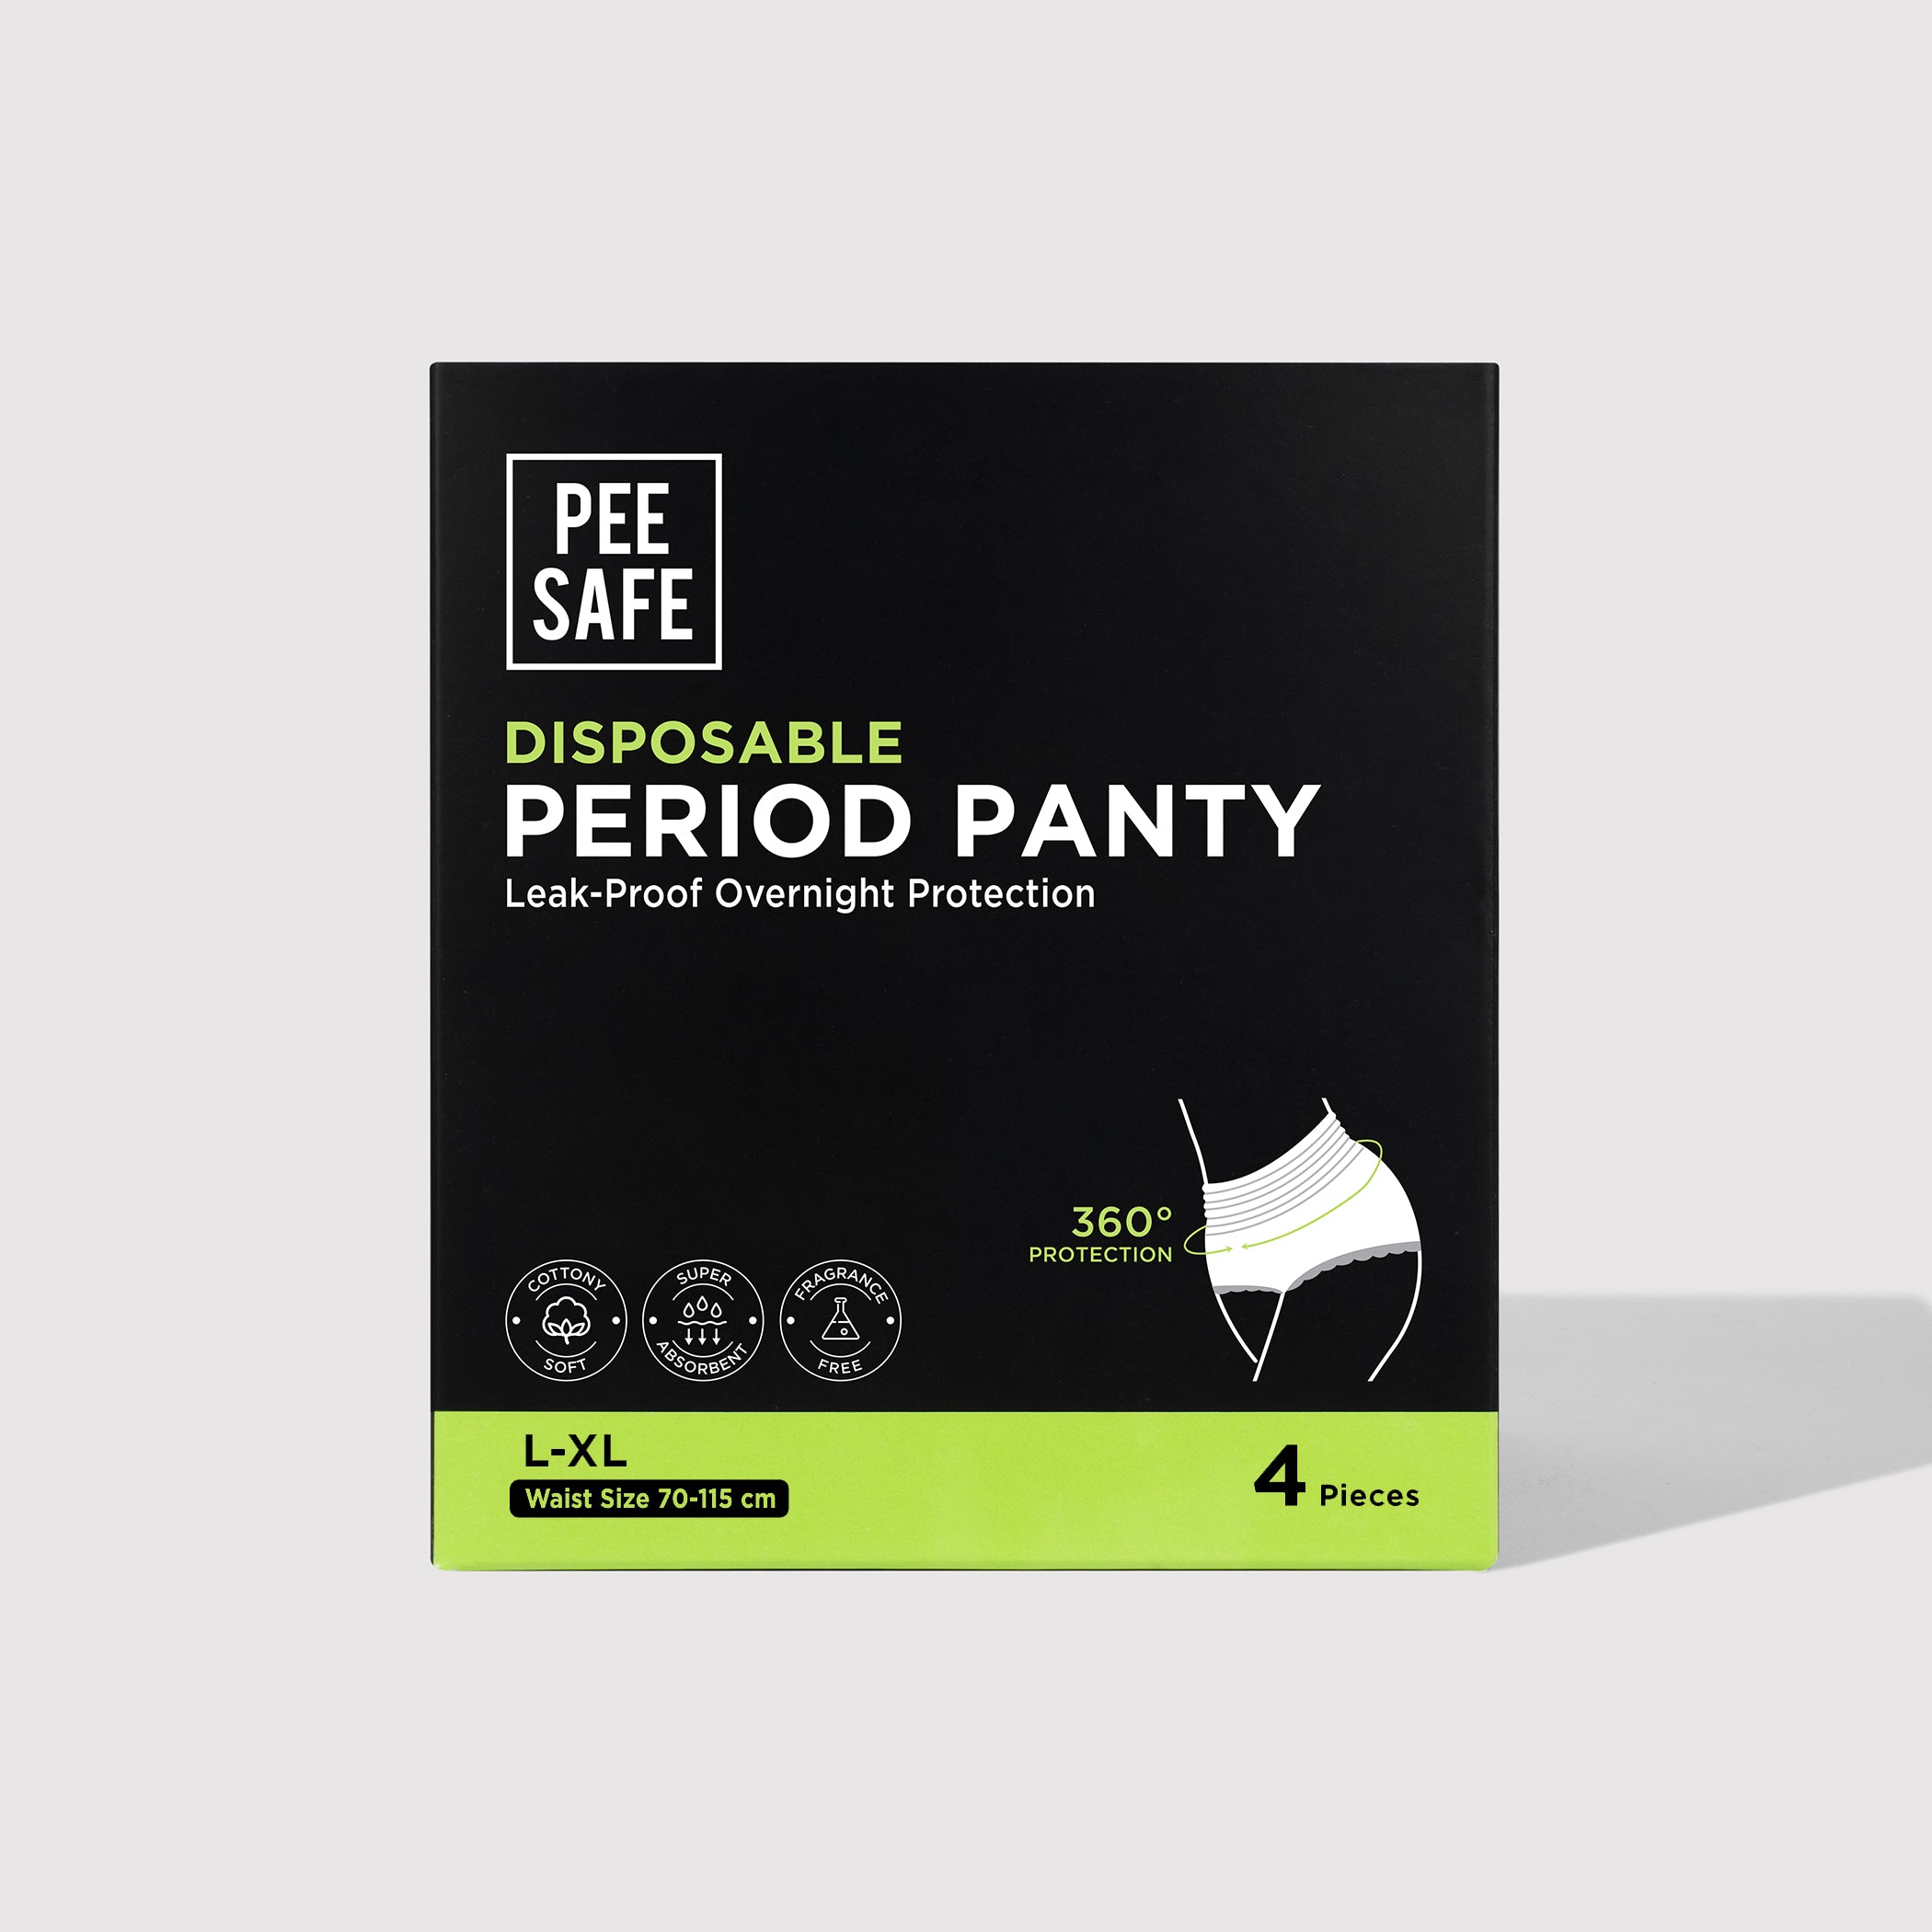 Pee Safe Disposable Period Panty (L-XL) 4N